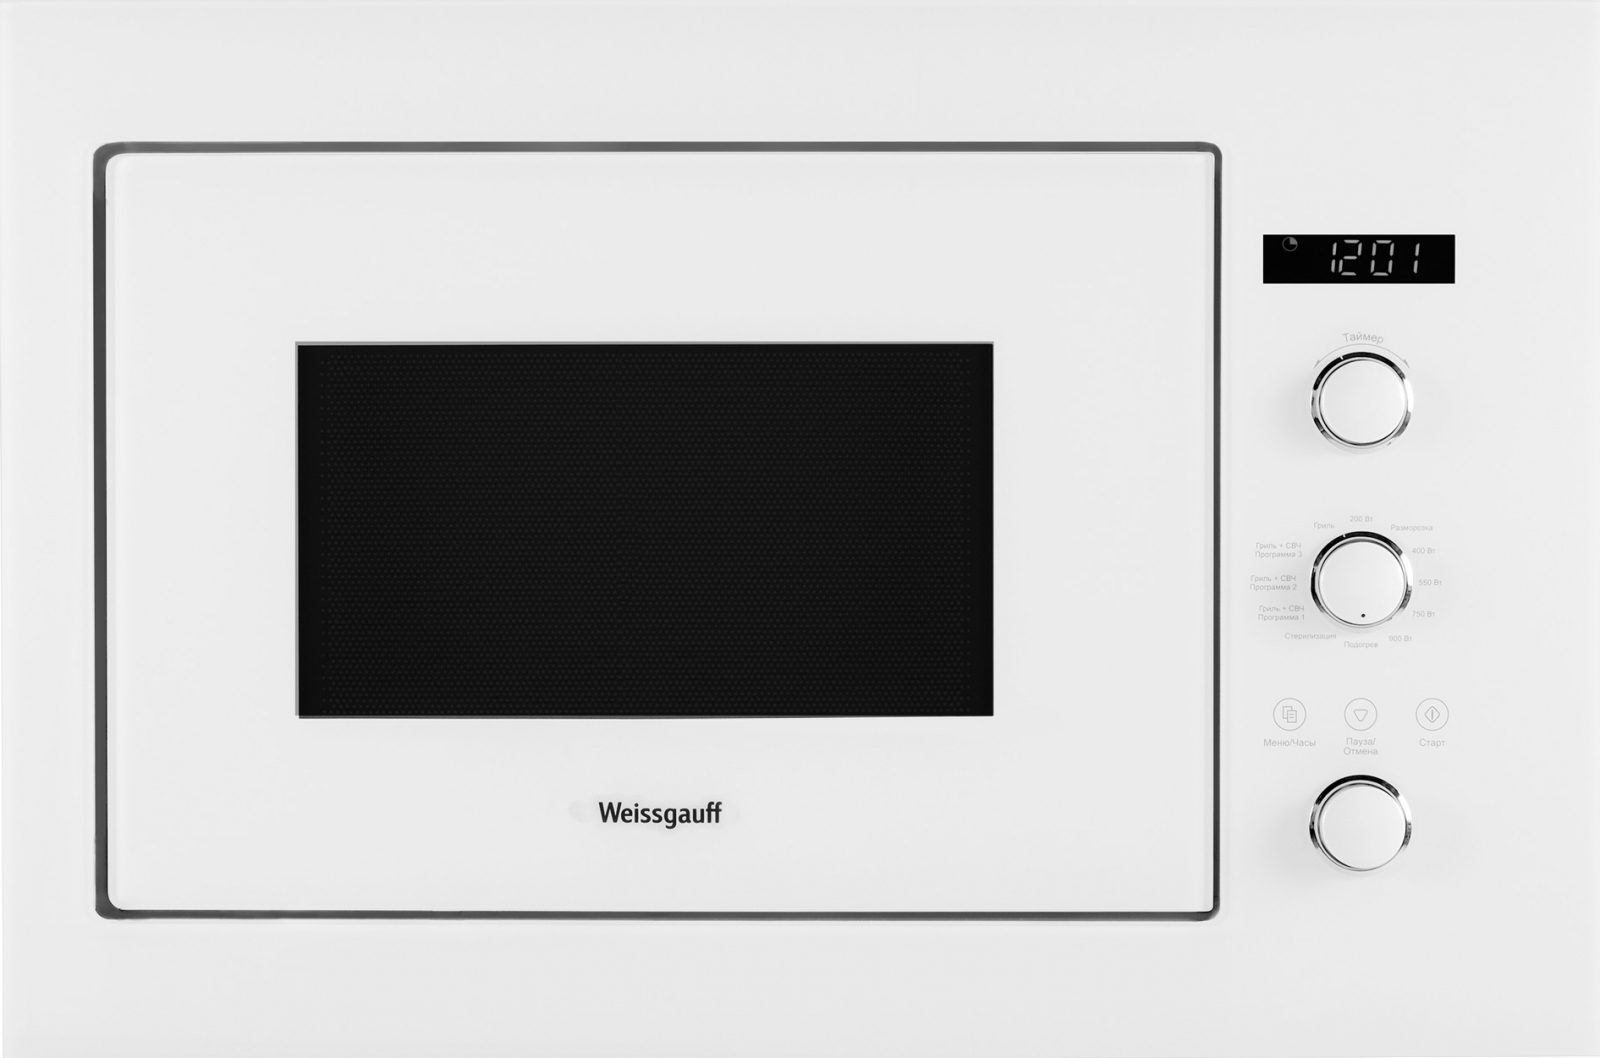 Встраиваемая микроволновая печь Weissgauff HMT-252 White встраиваемая микроволновая печь weissgauff hmt 720 bx grill